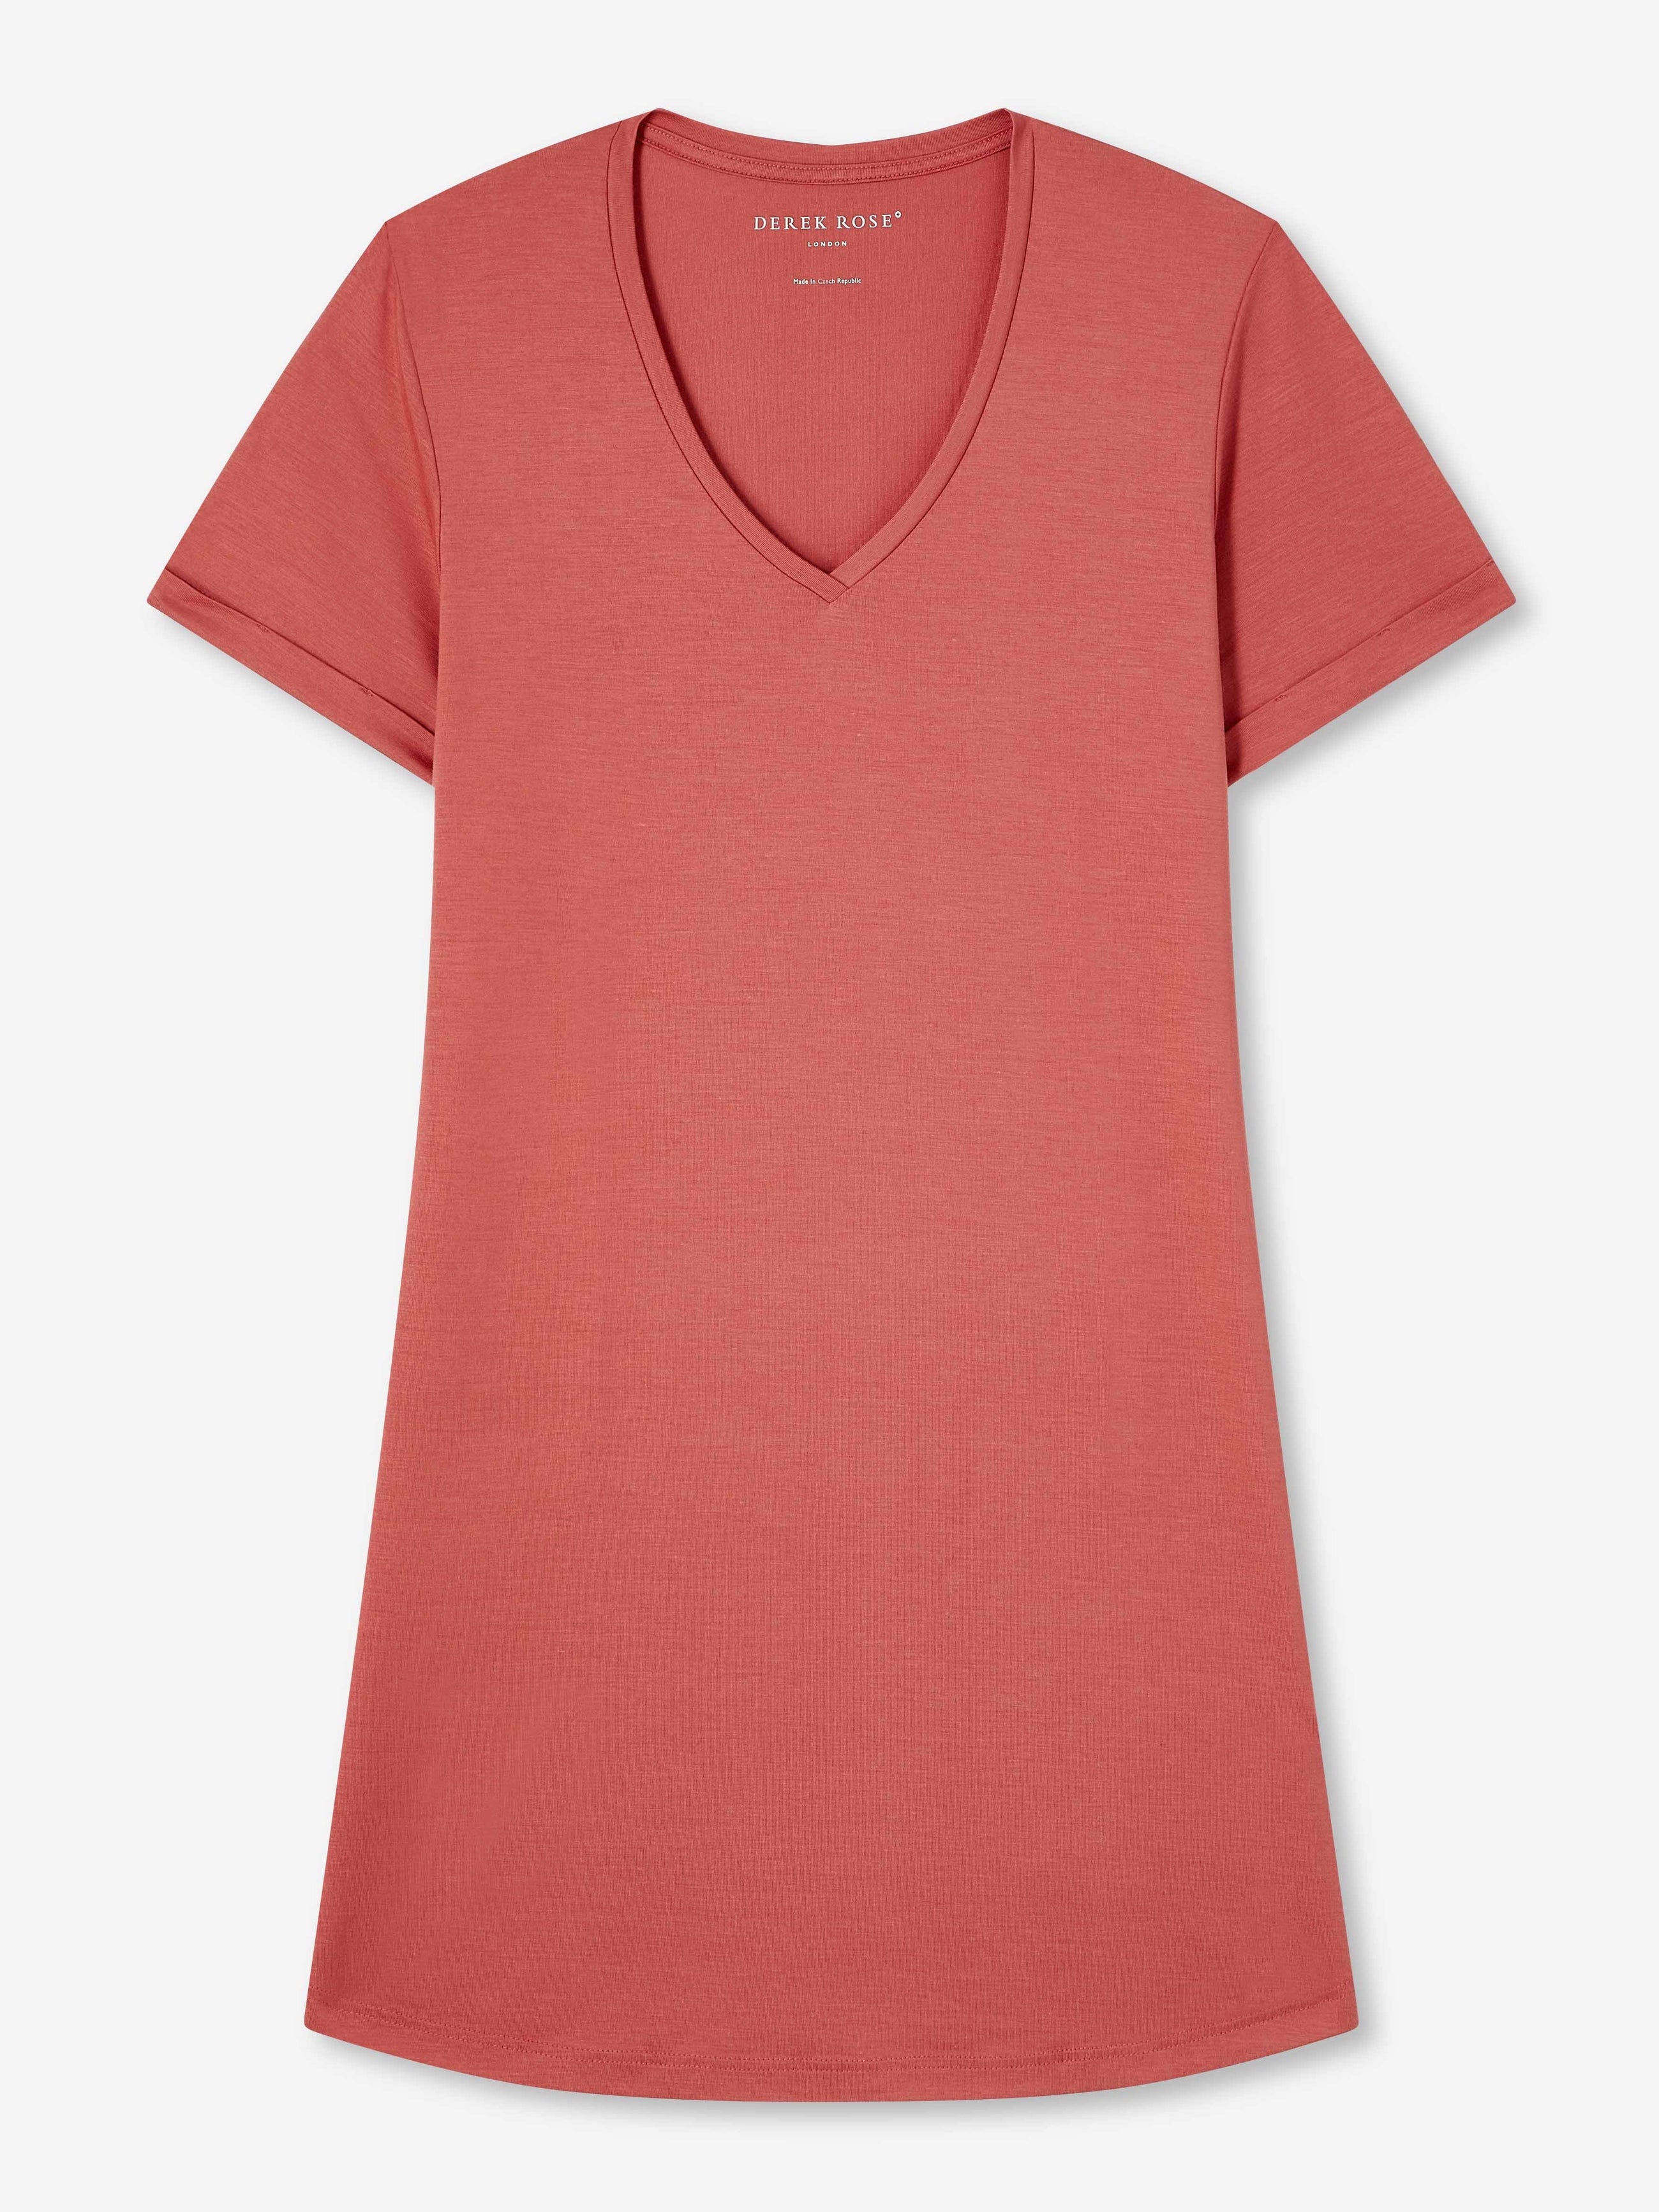 Women's V-Neck Sleep T-Shirt Lara Micro Modal Stretch Soft Cedar